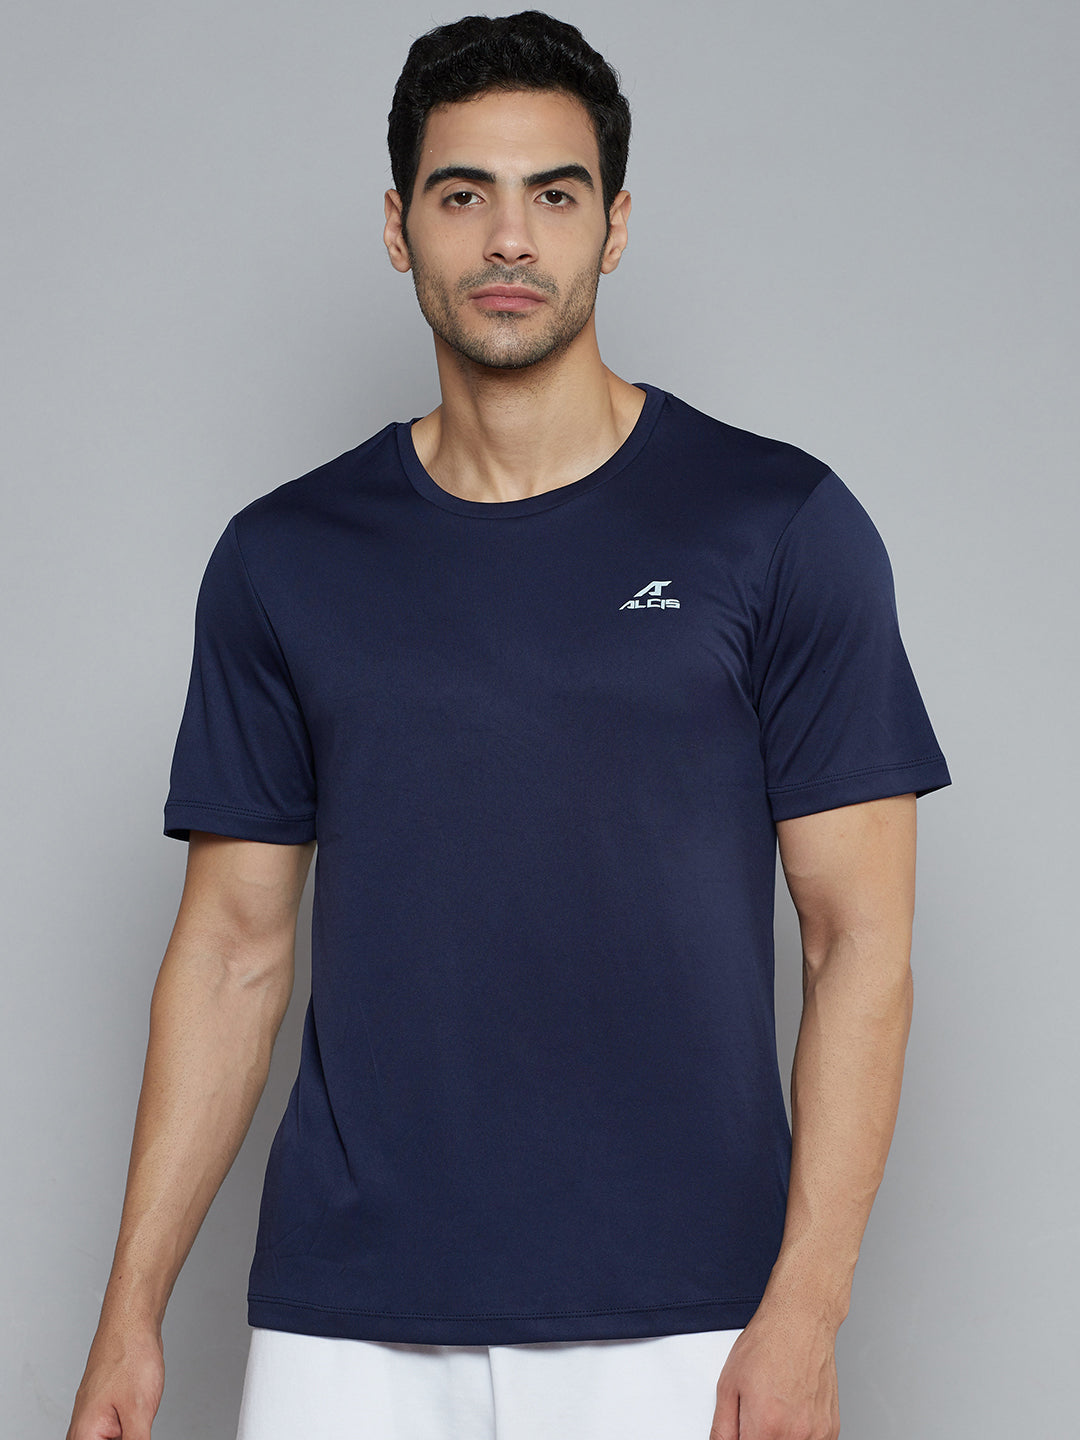 Alcis Men Navy Blue Solid Slim Fit T-shirt